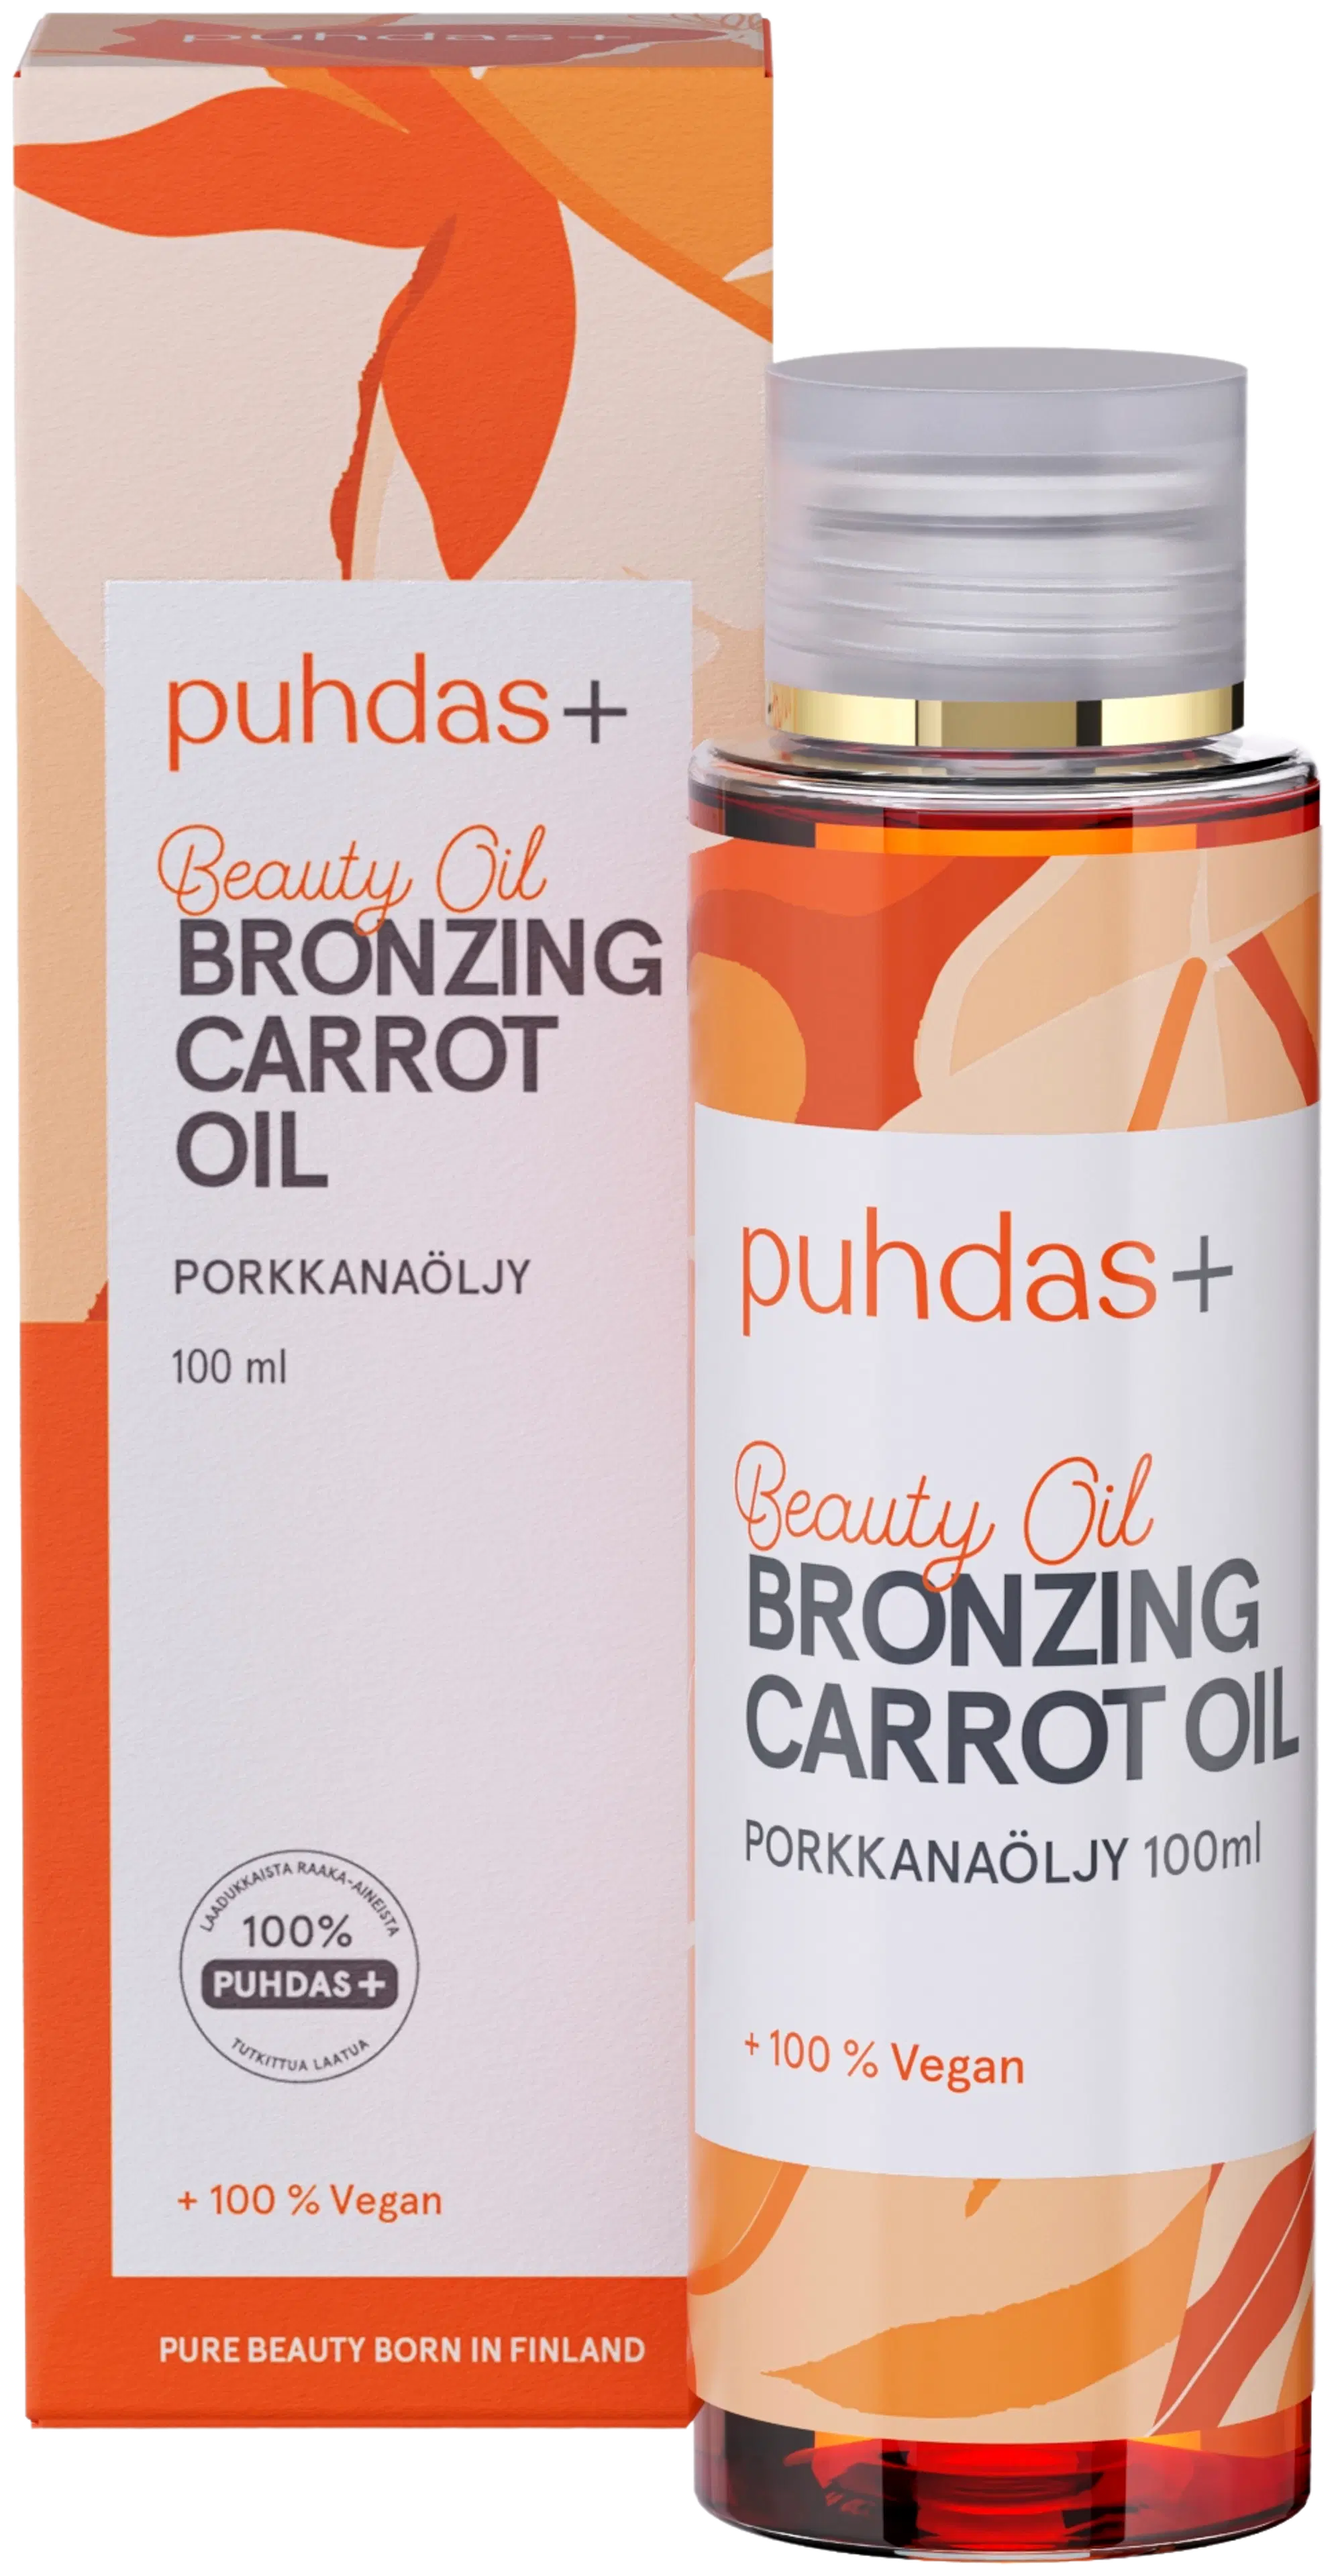 Puhdas+ Beauty Oil Bronzing Carrot Oil öljy 100 ml